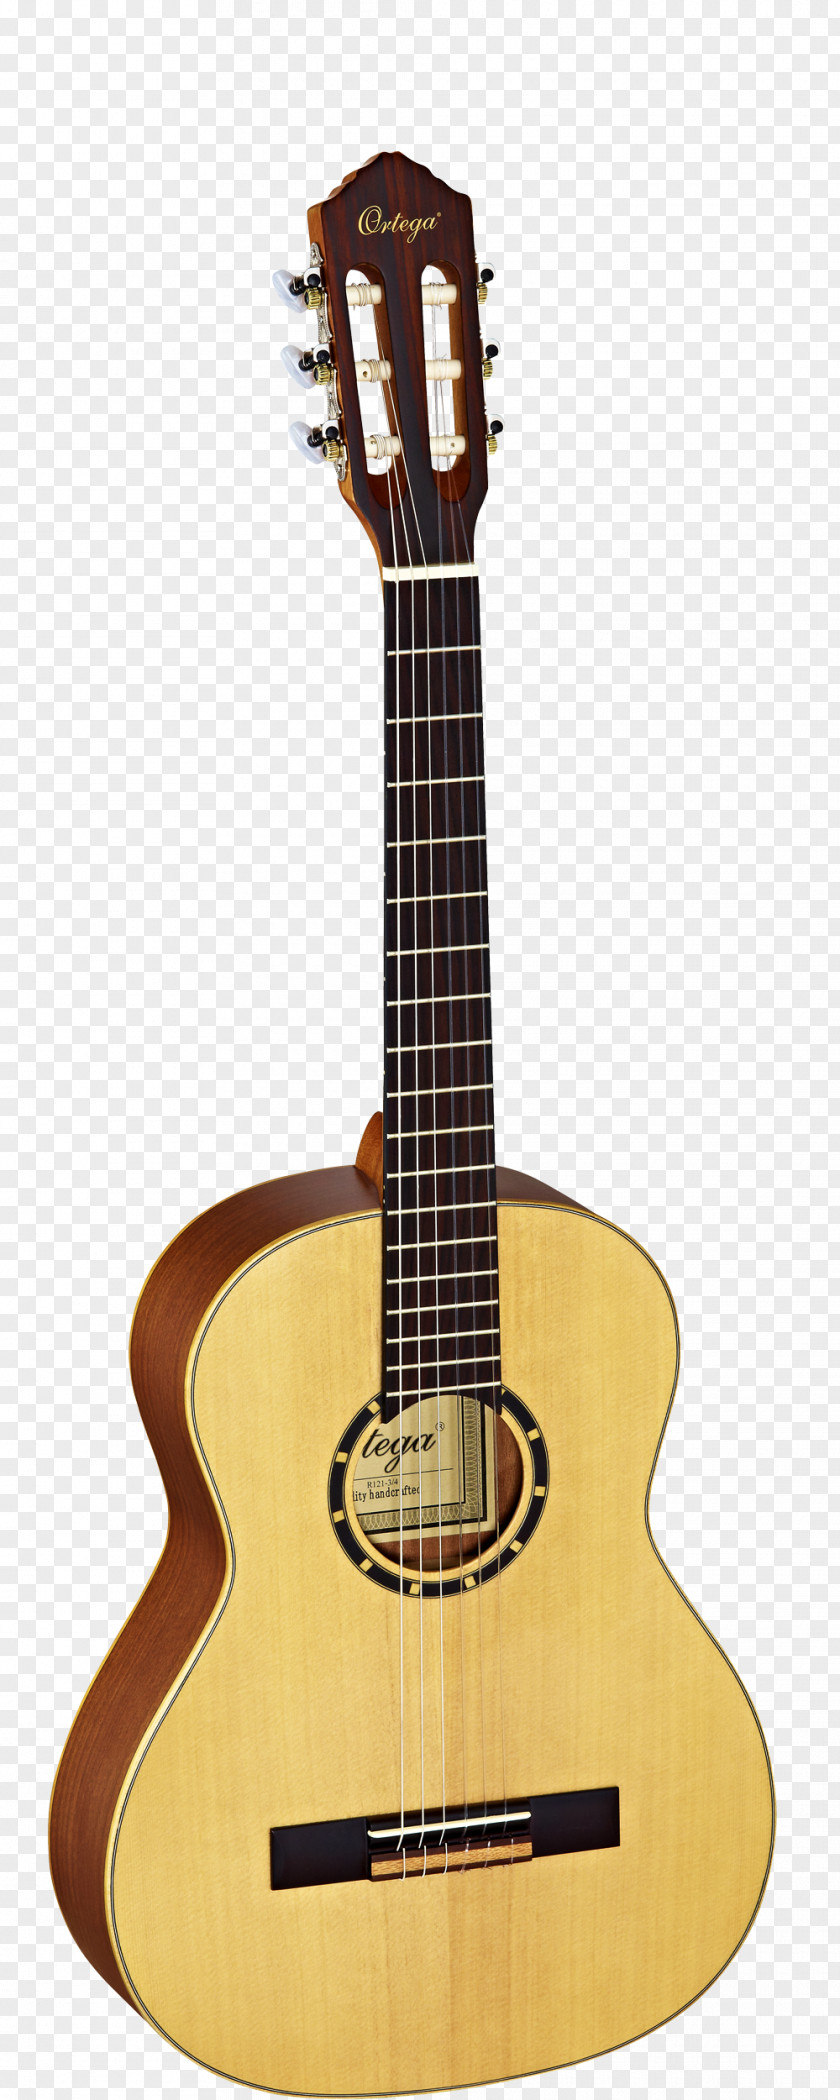 Amancio Ortega Classical Guitar Steel-string Acoustic Musical Instruments PNG